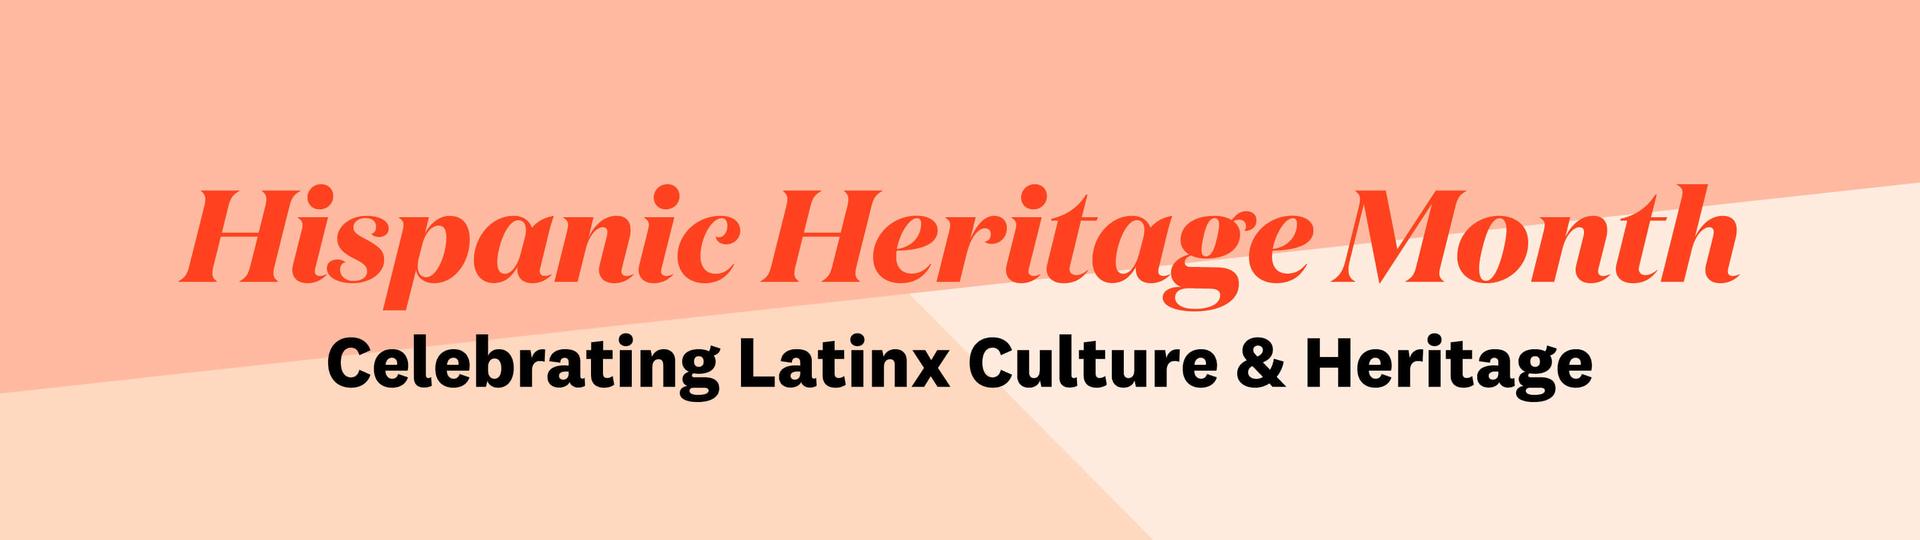 HispanicHeritage-Marcelo-BlogHeader